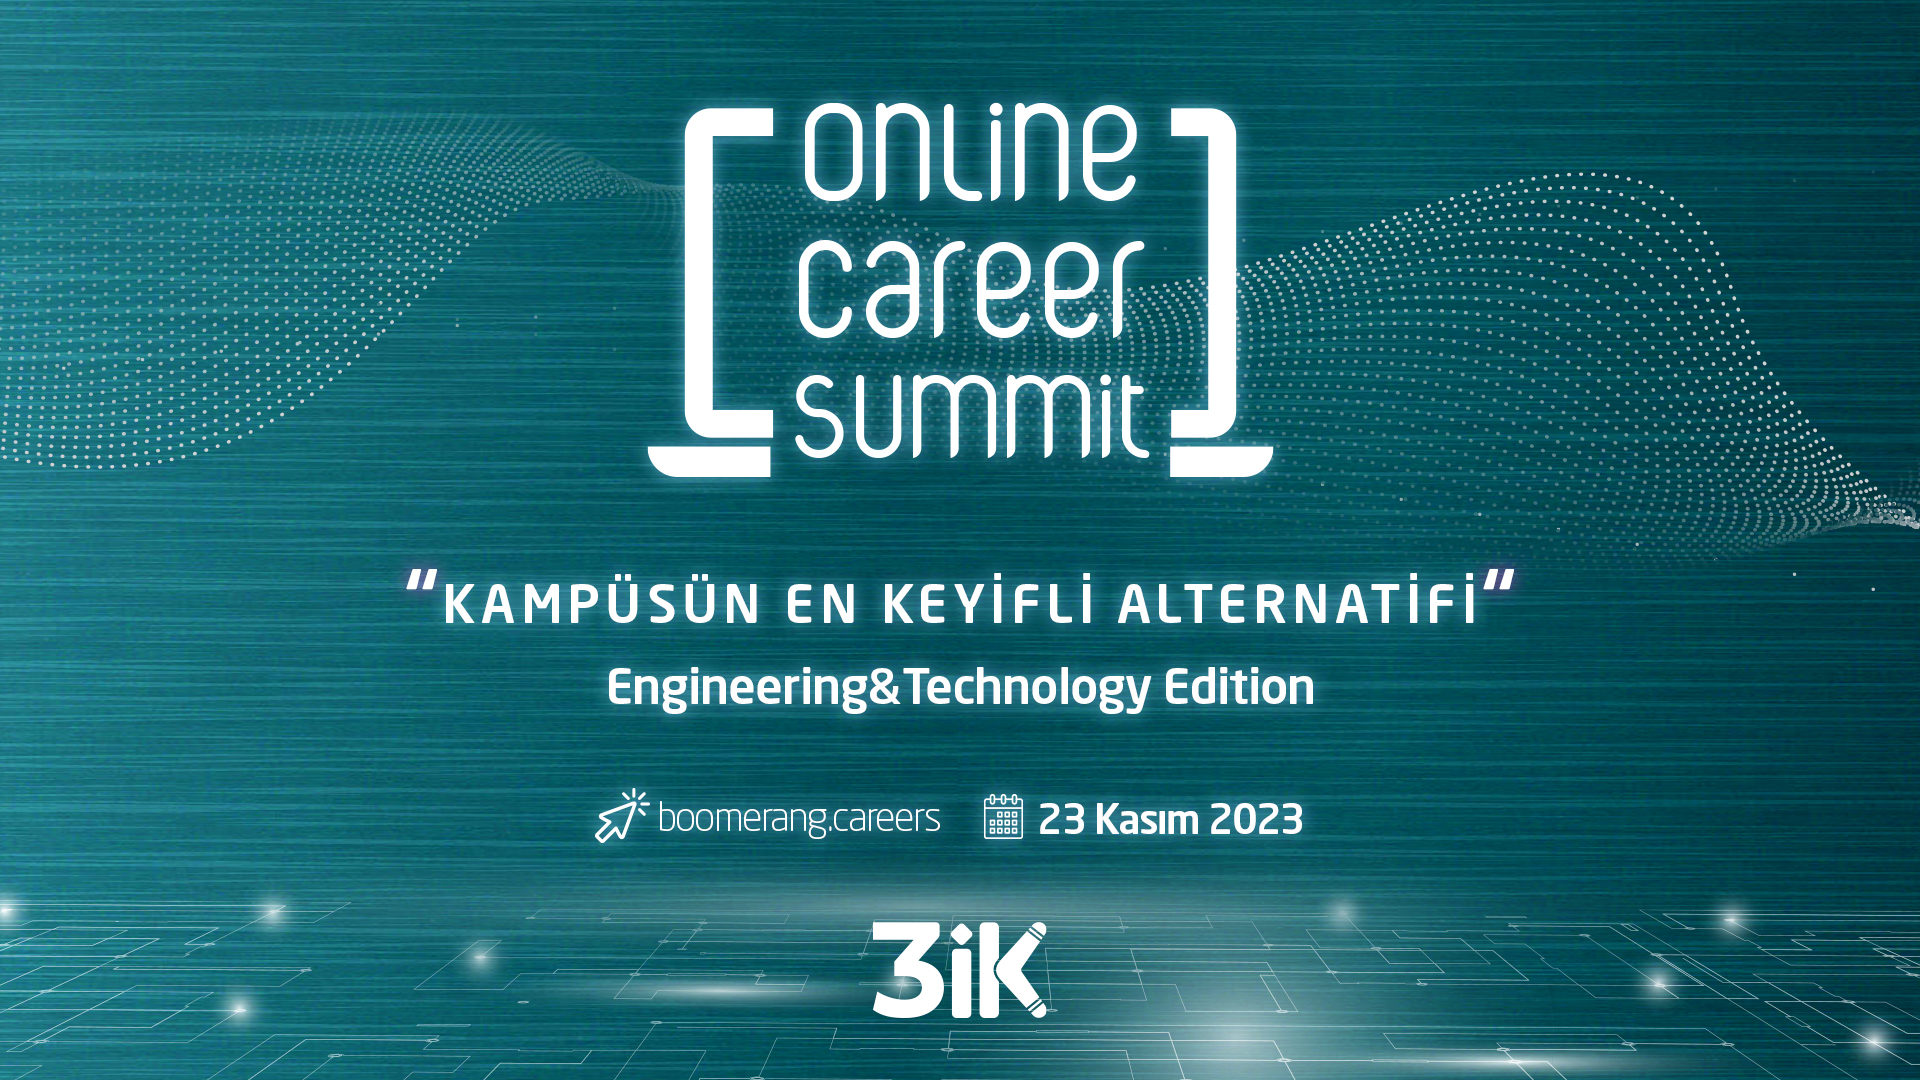 Online Career Summit: Engineering&Technology Edition